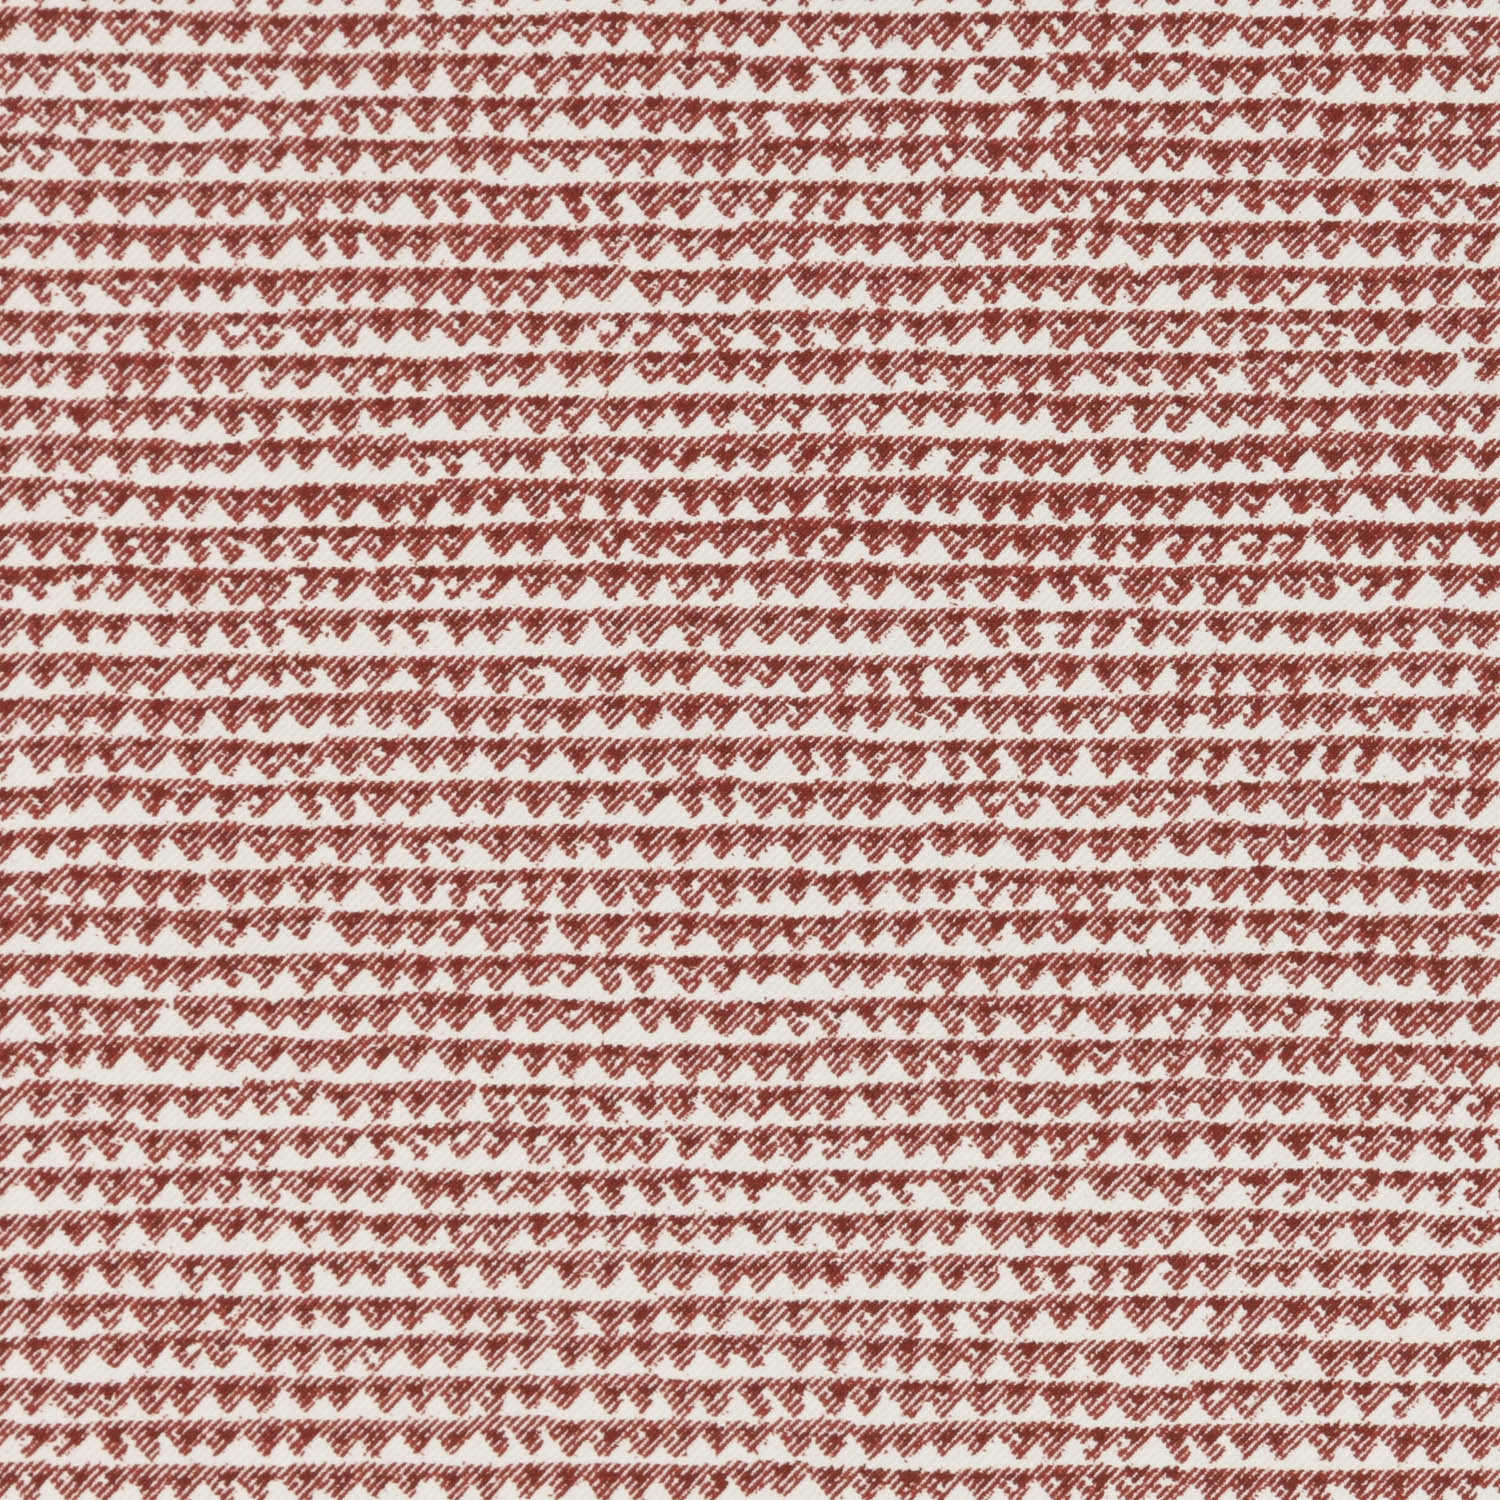 l-289-red-mendip-cotton-1.jpg